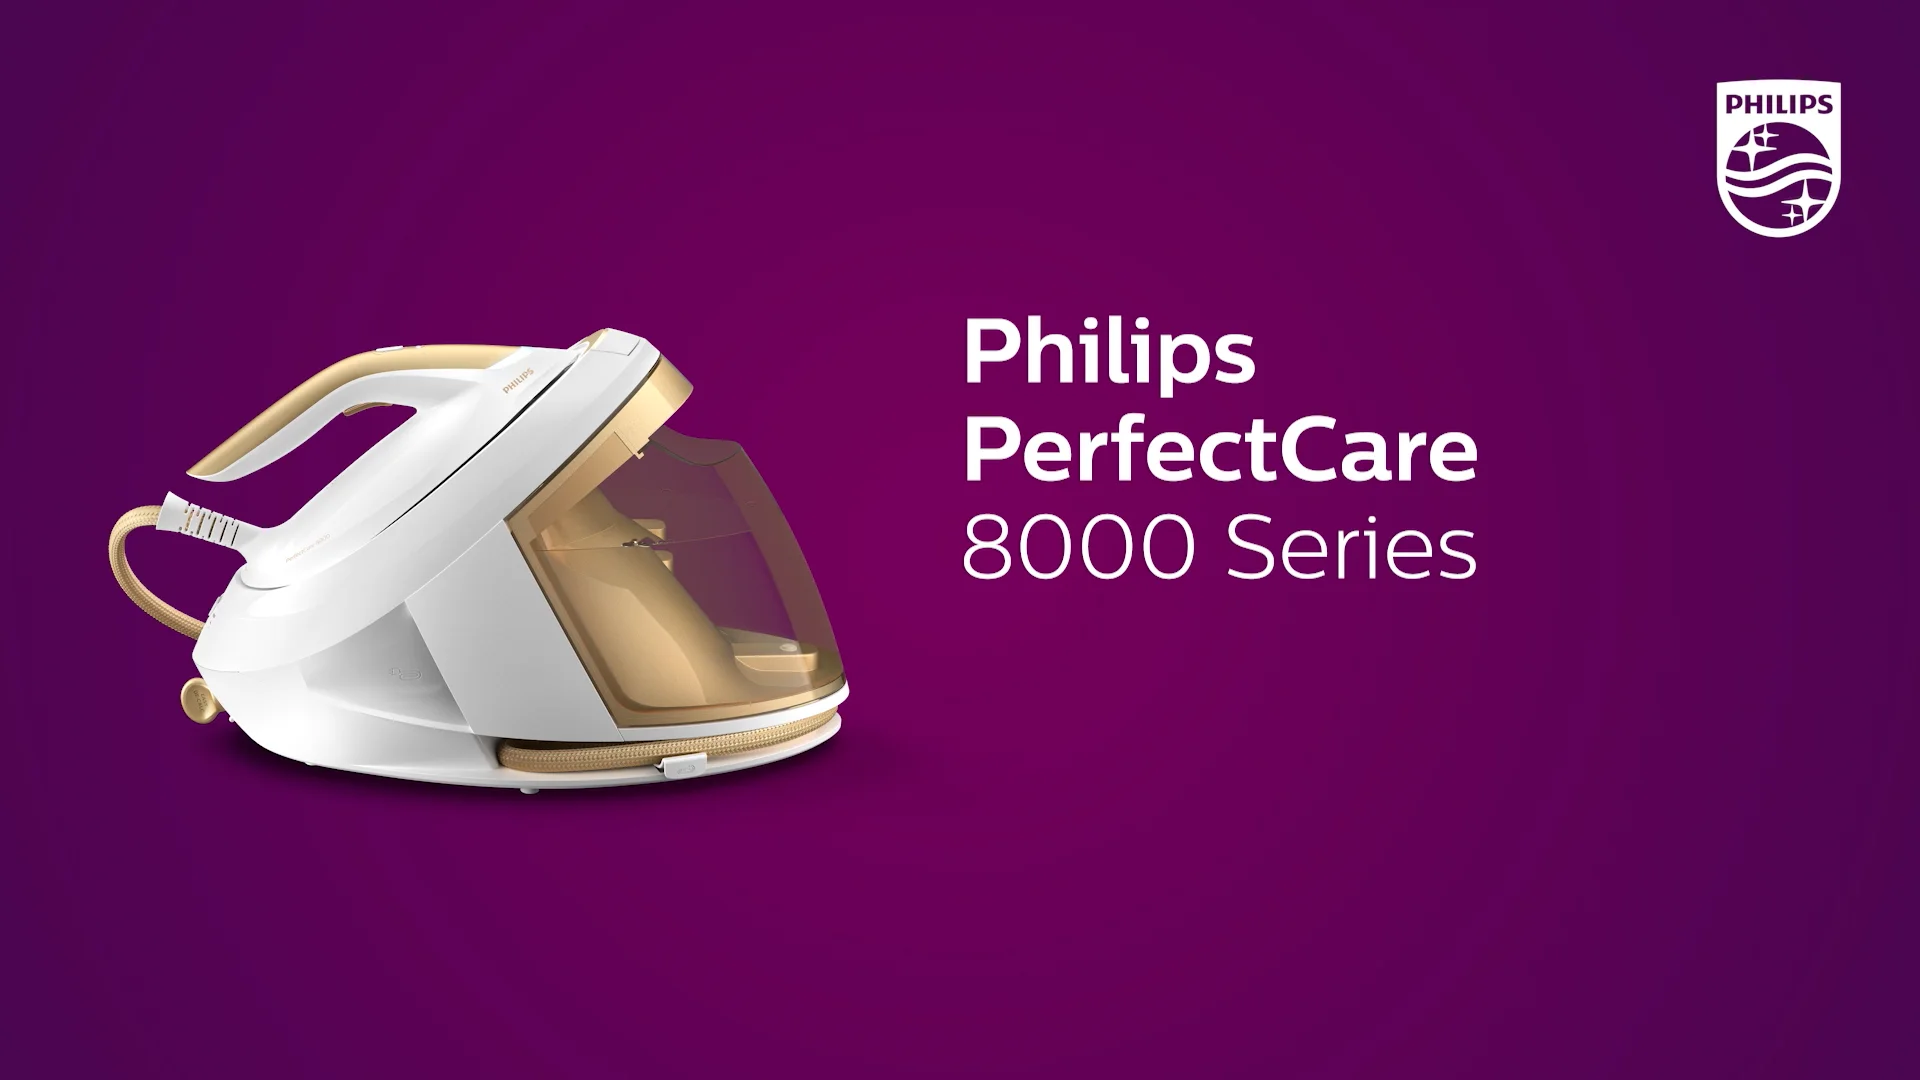 Philips PerfectCare 8000 Series Steam Generator PSG8040_65 on Vimeo